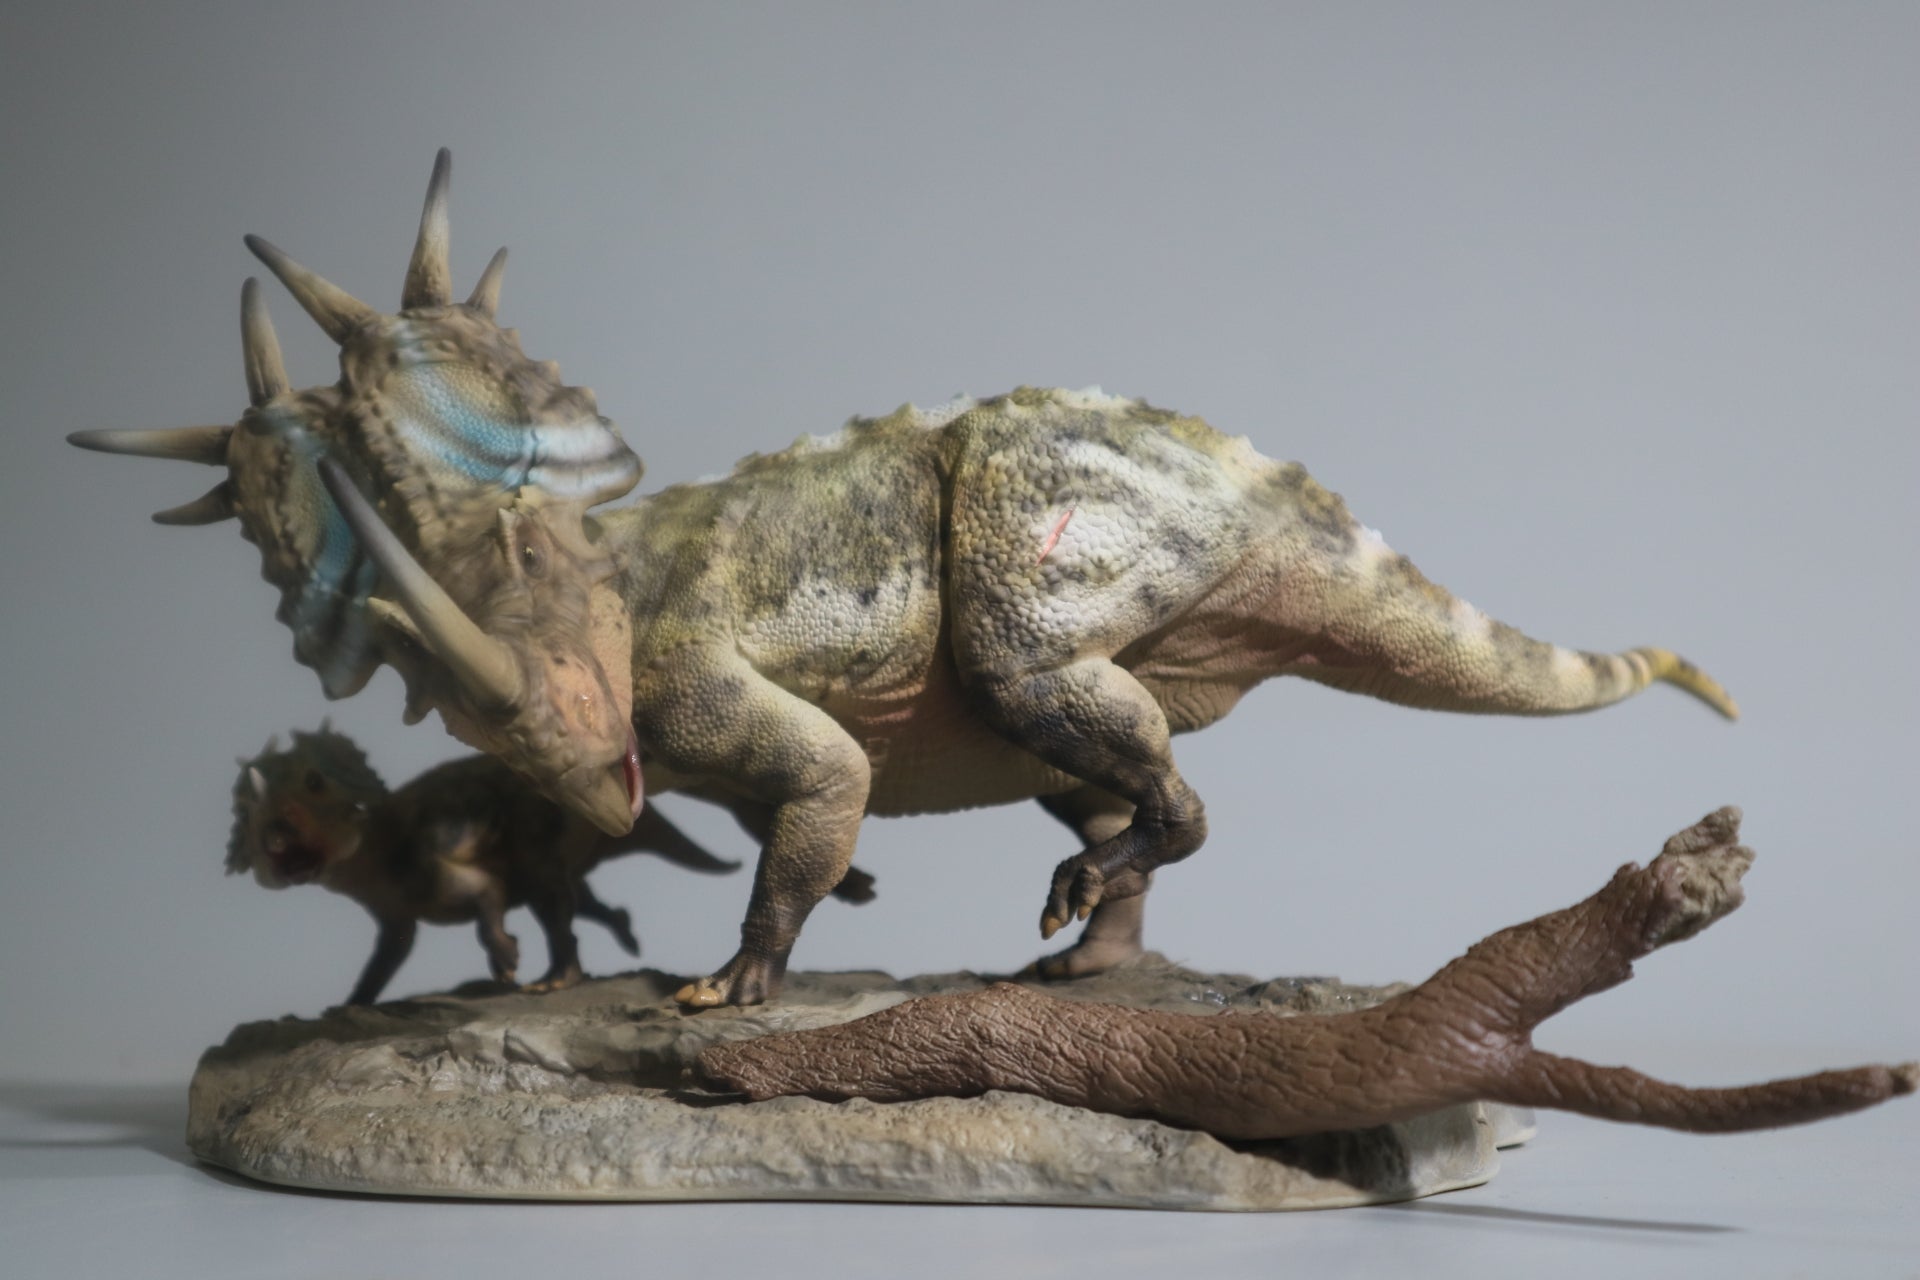 A Rubeosaurus roams a prehistoric environment Solid-Faced Canvas Print